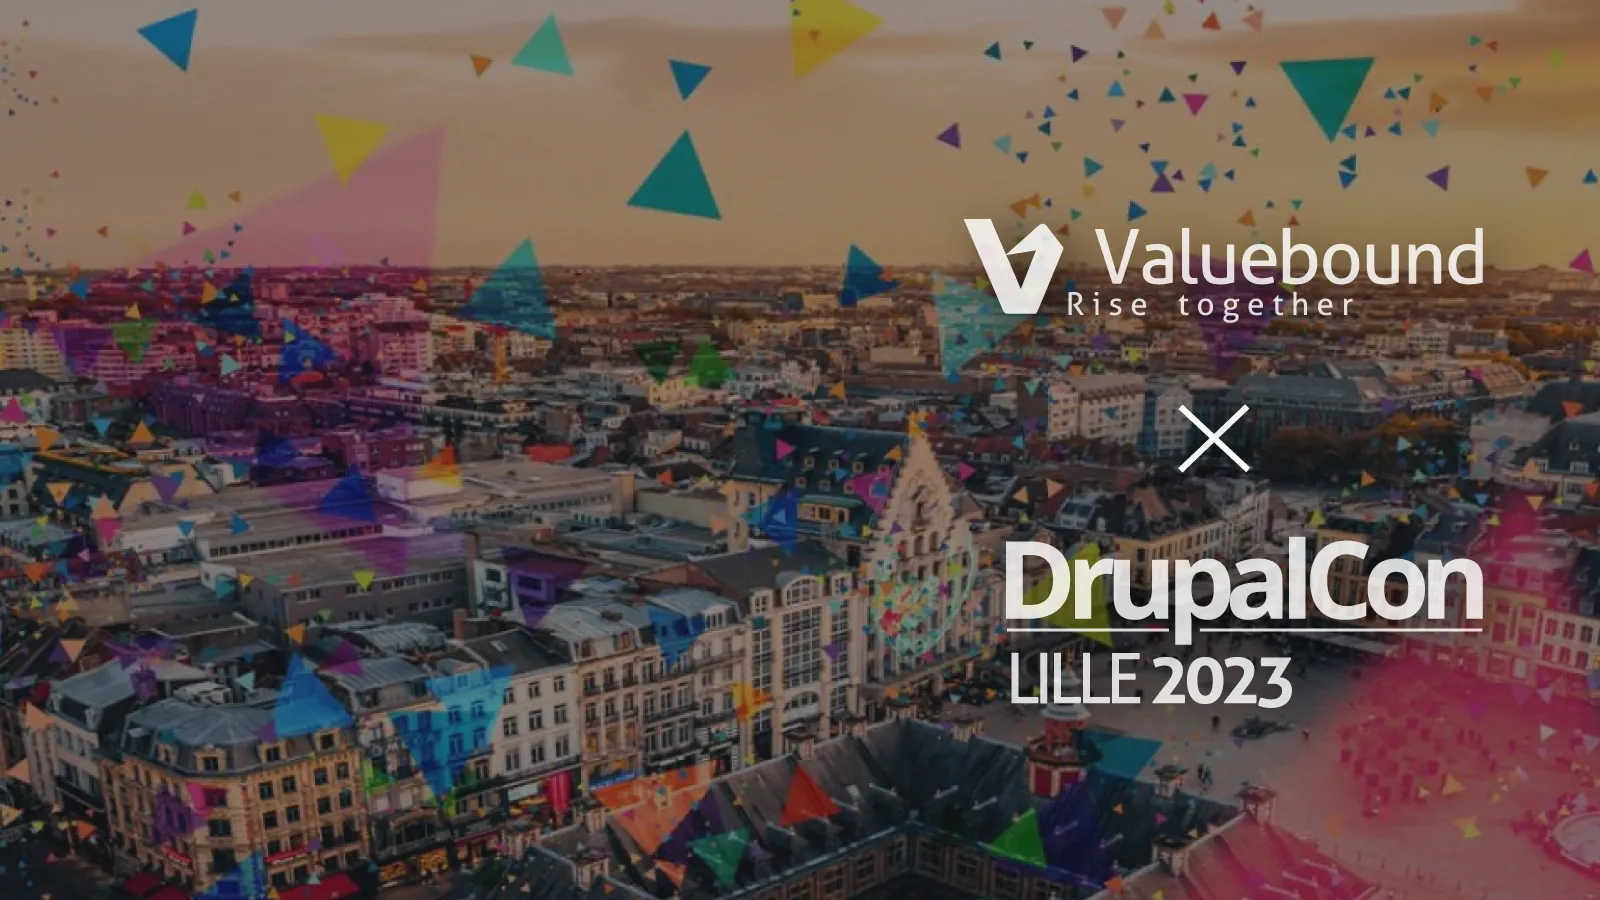 Empowering Drupal: ValueBound at Lille!